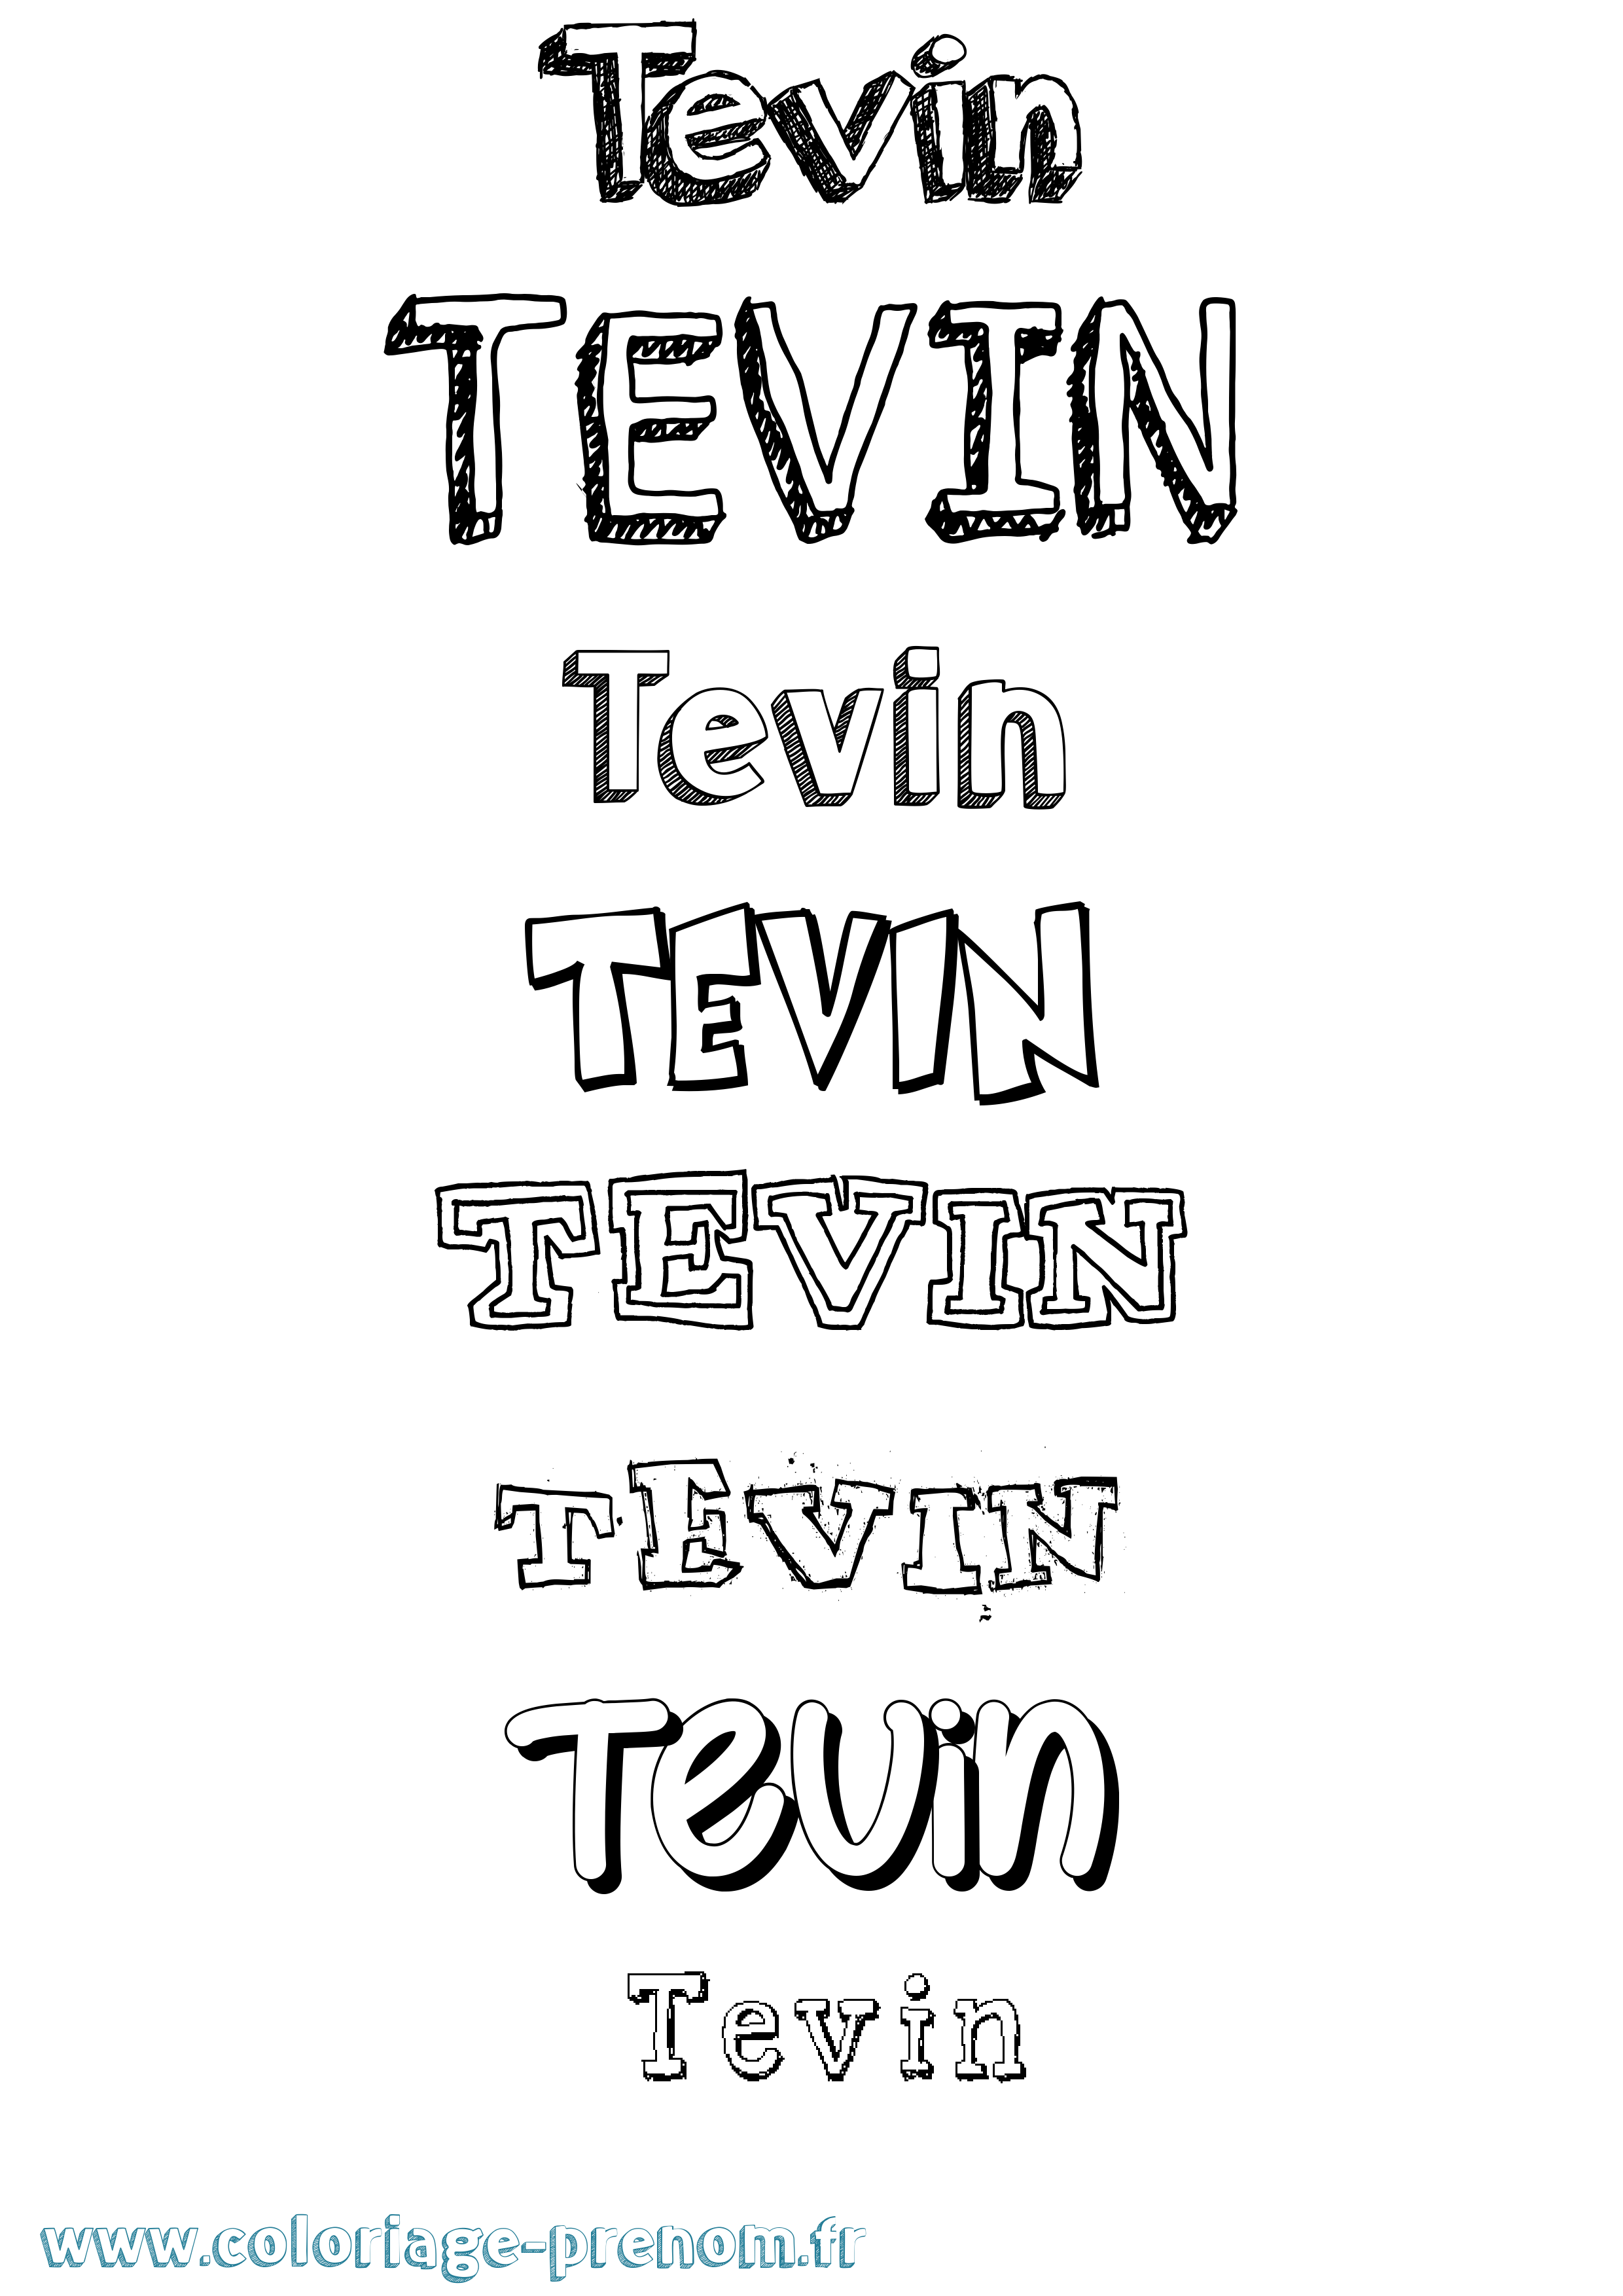 Coloriage prénom Tevin Dessiné